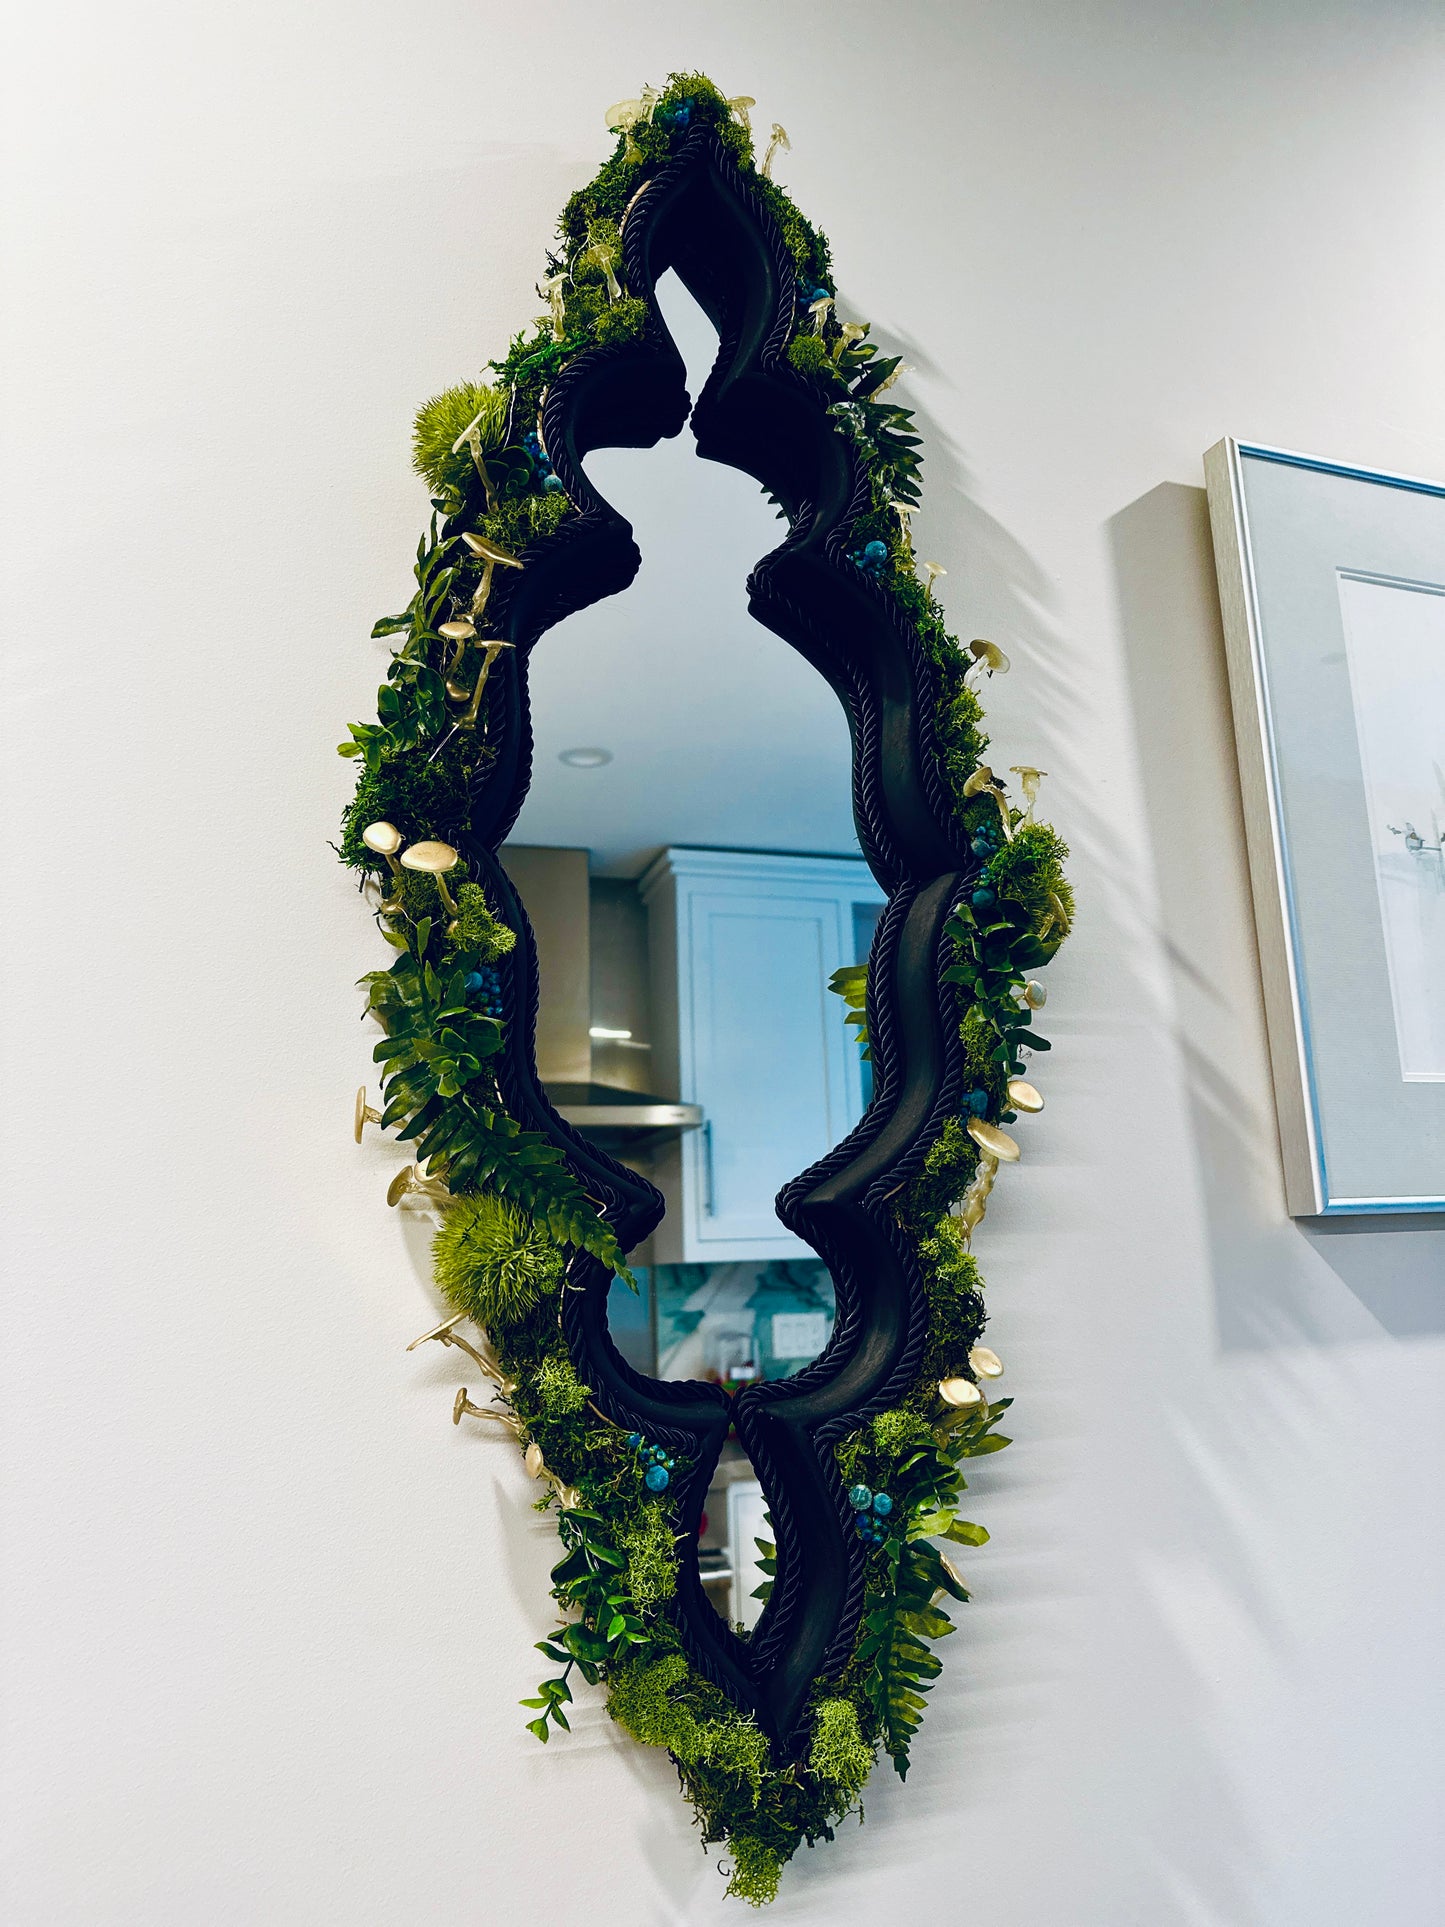 Moss Mirror Home Decor with Mushroom Fairy Lights